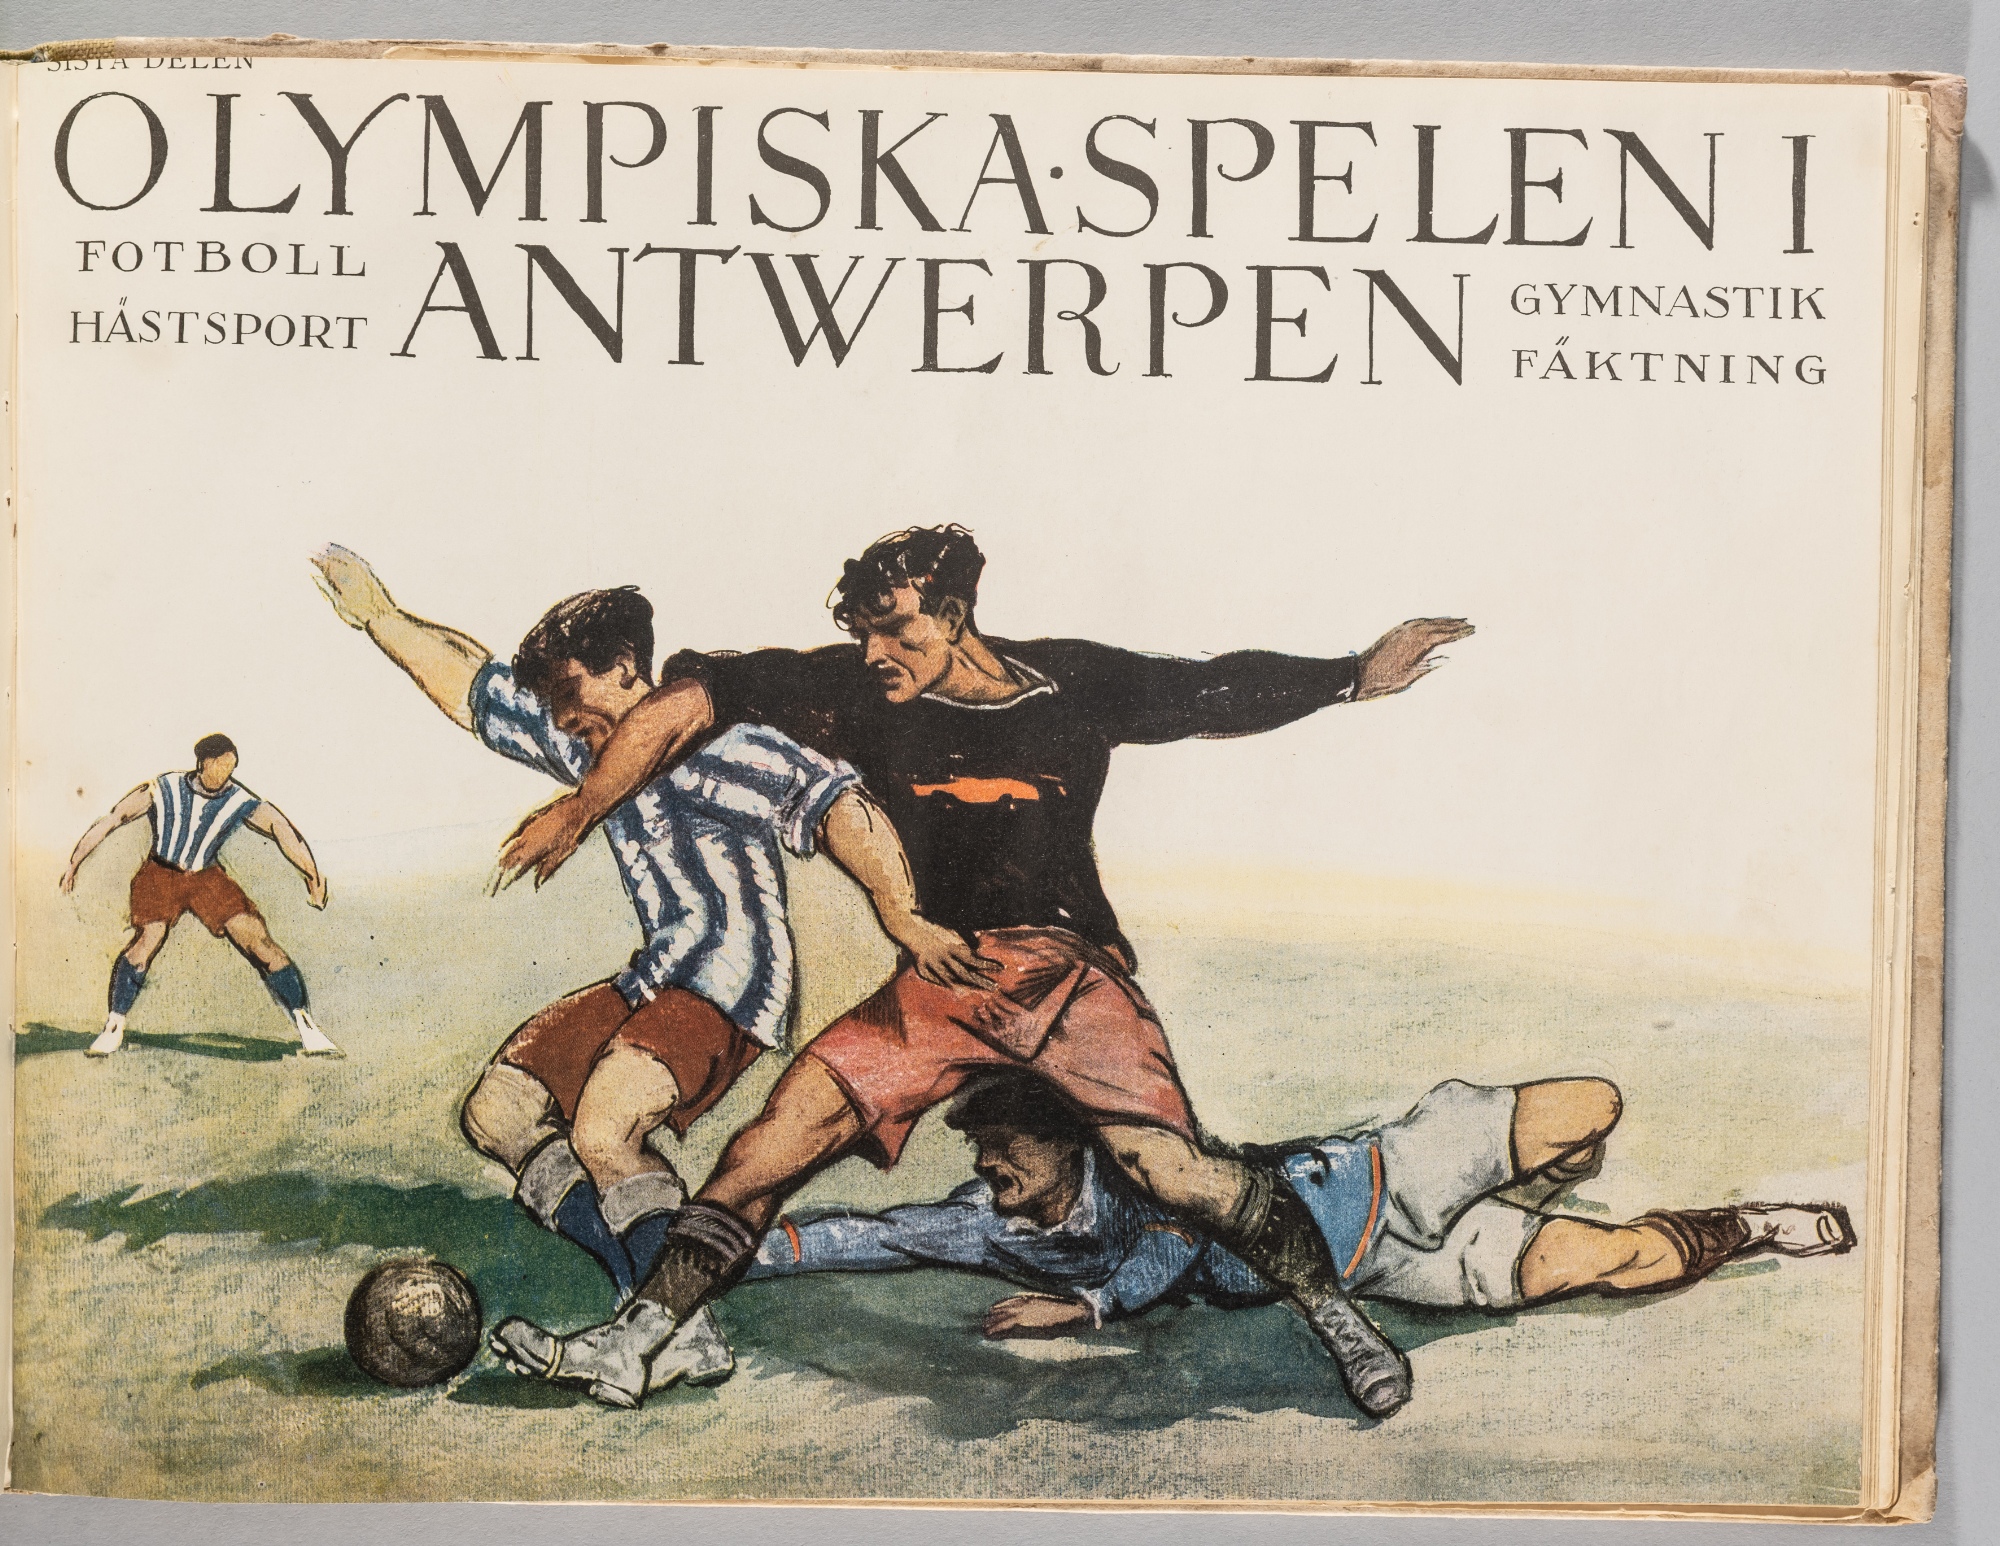 Antwerp 1920 Olympic Games "Olympiska Spelen Antwerpen 1920", hardback, 160-page, published by Ahlen - Image 5 of 5